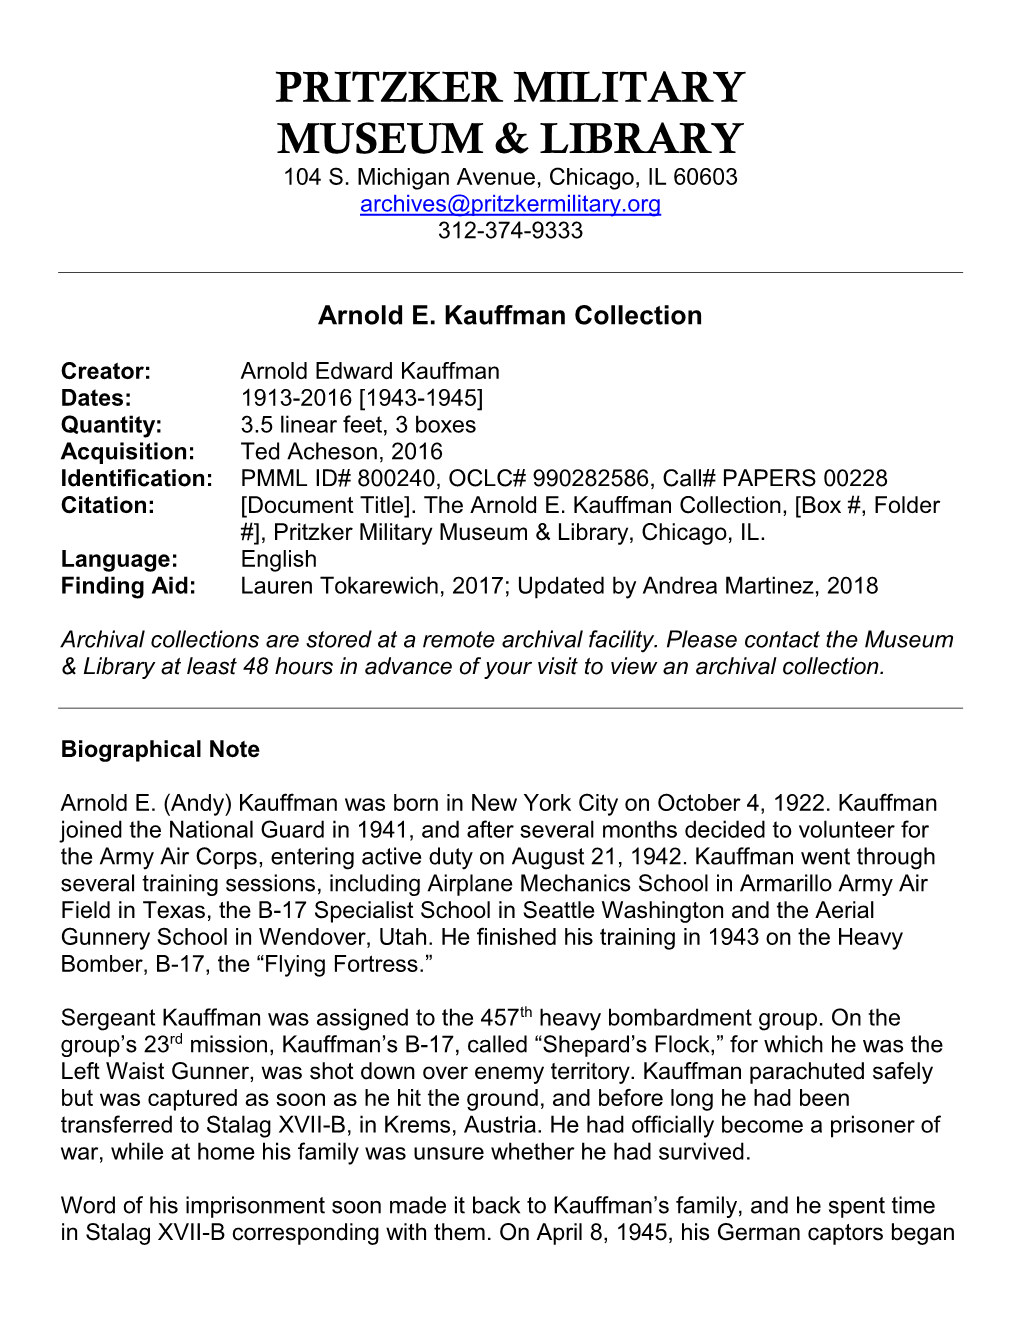 Arnold E. Kauffman Collection